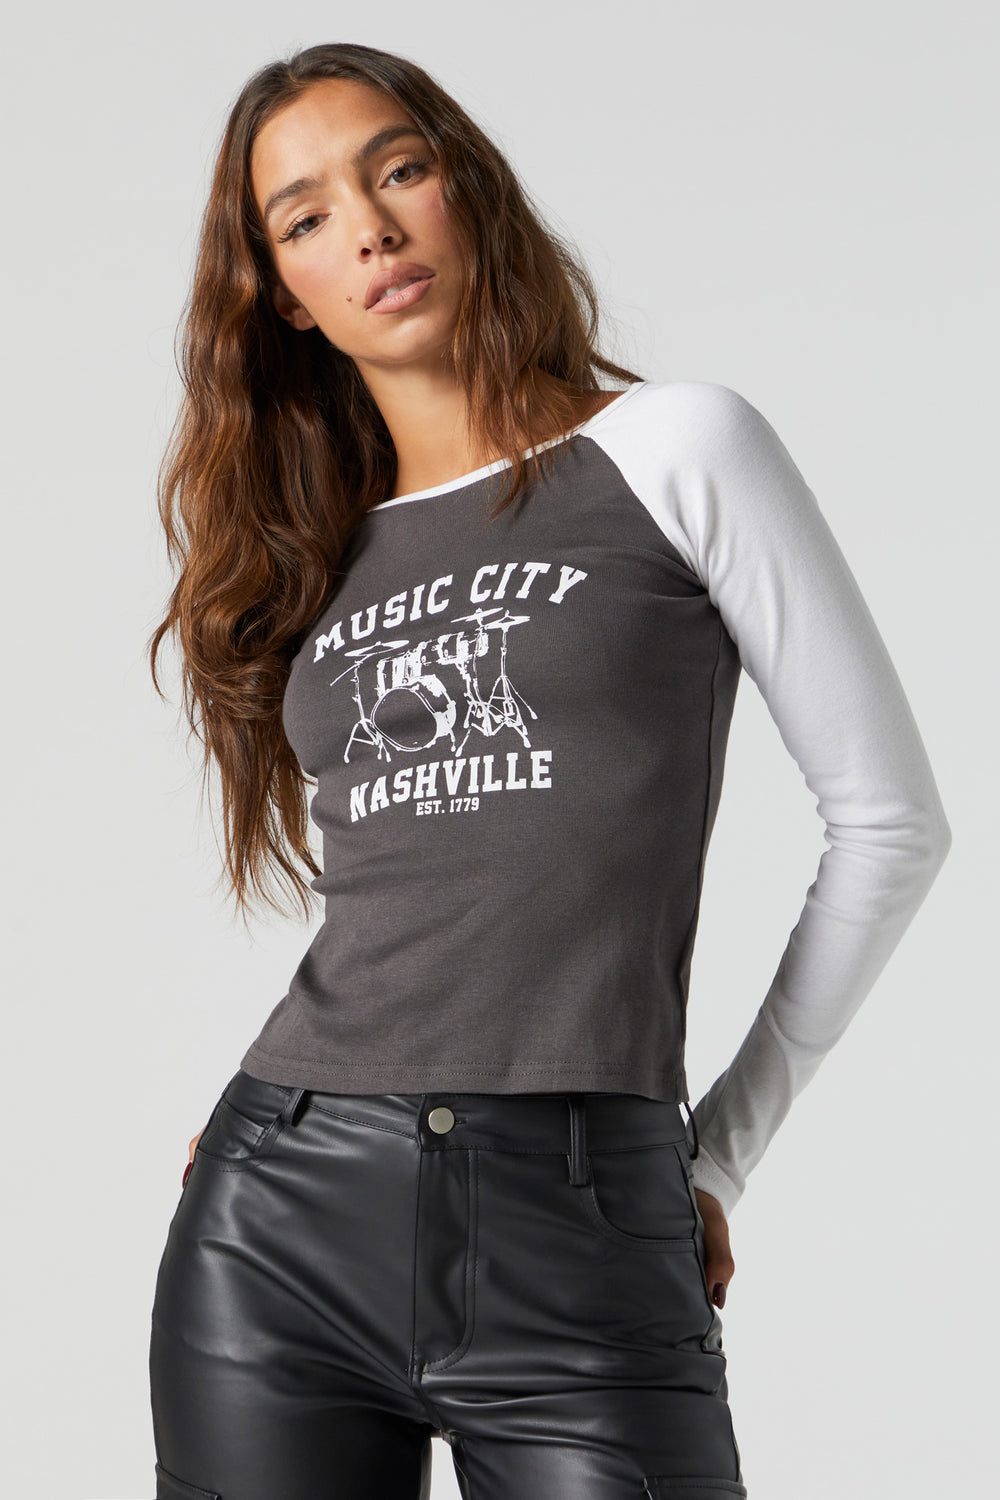 Music City Nashville Graphic Raglan Long Sleeve Top Music City Nashville Graphic Raglan Long Sleeve Top 1